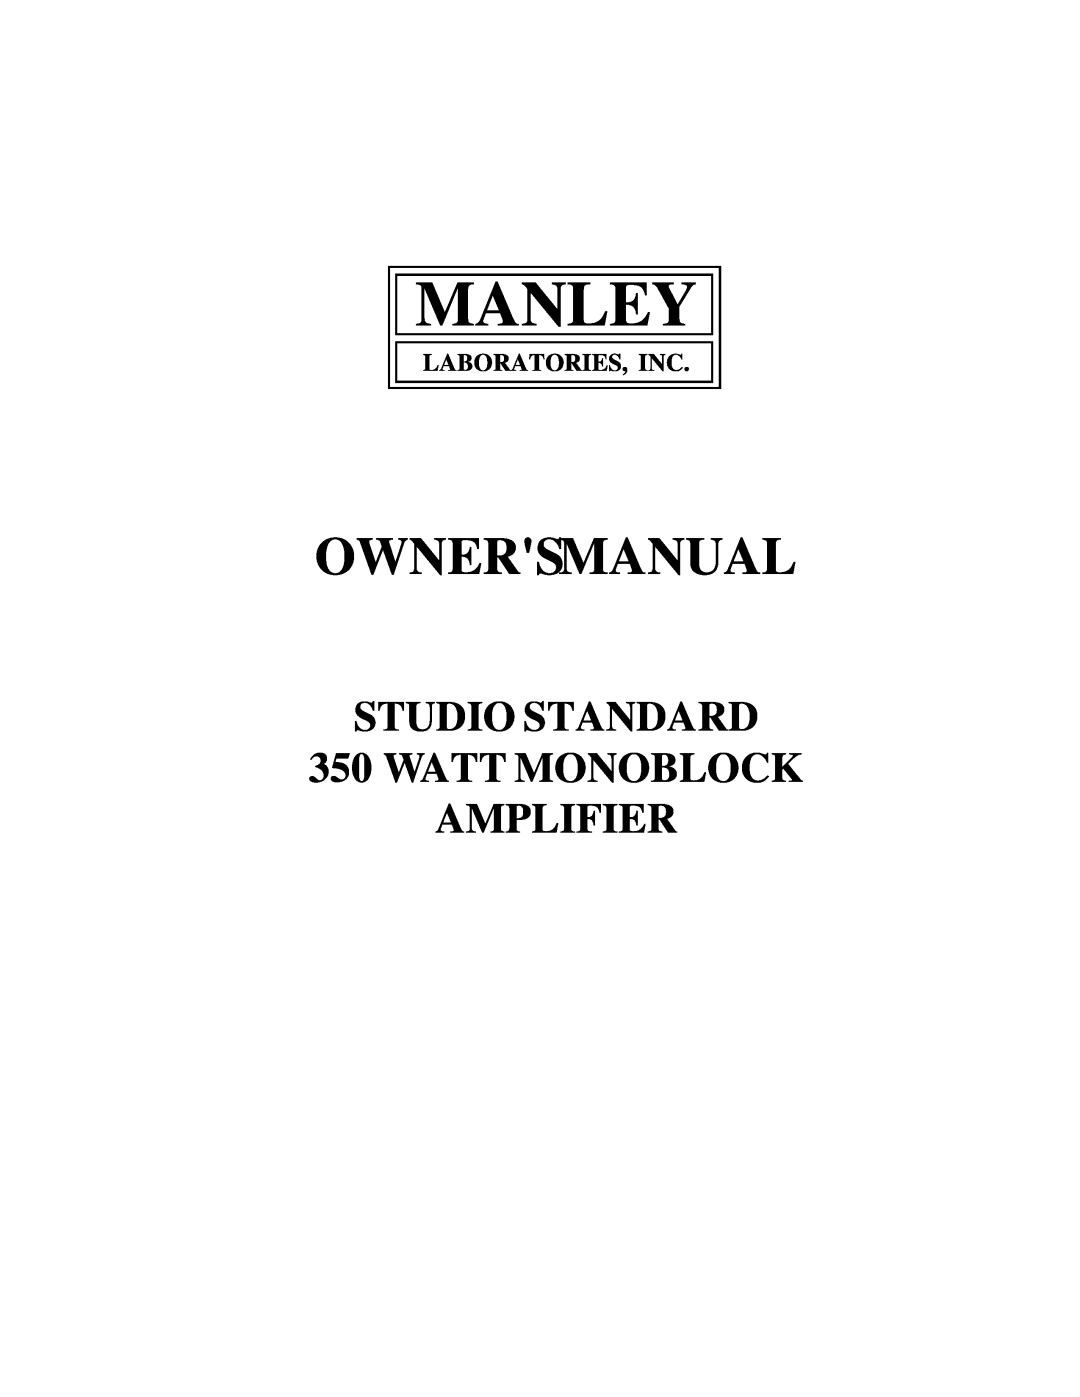 Manley Labs STUDIO STANDARD 350 WATT MONOBLOCK AMPLIFIER owner manual Laboratories, Inc, Manley, Ownersmanual 